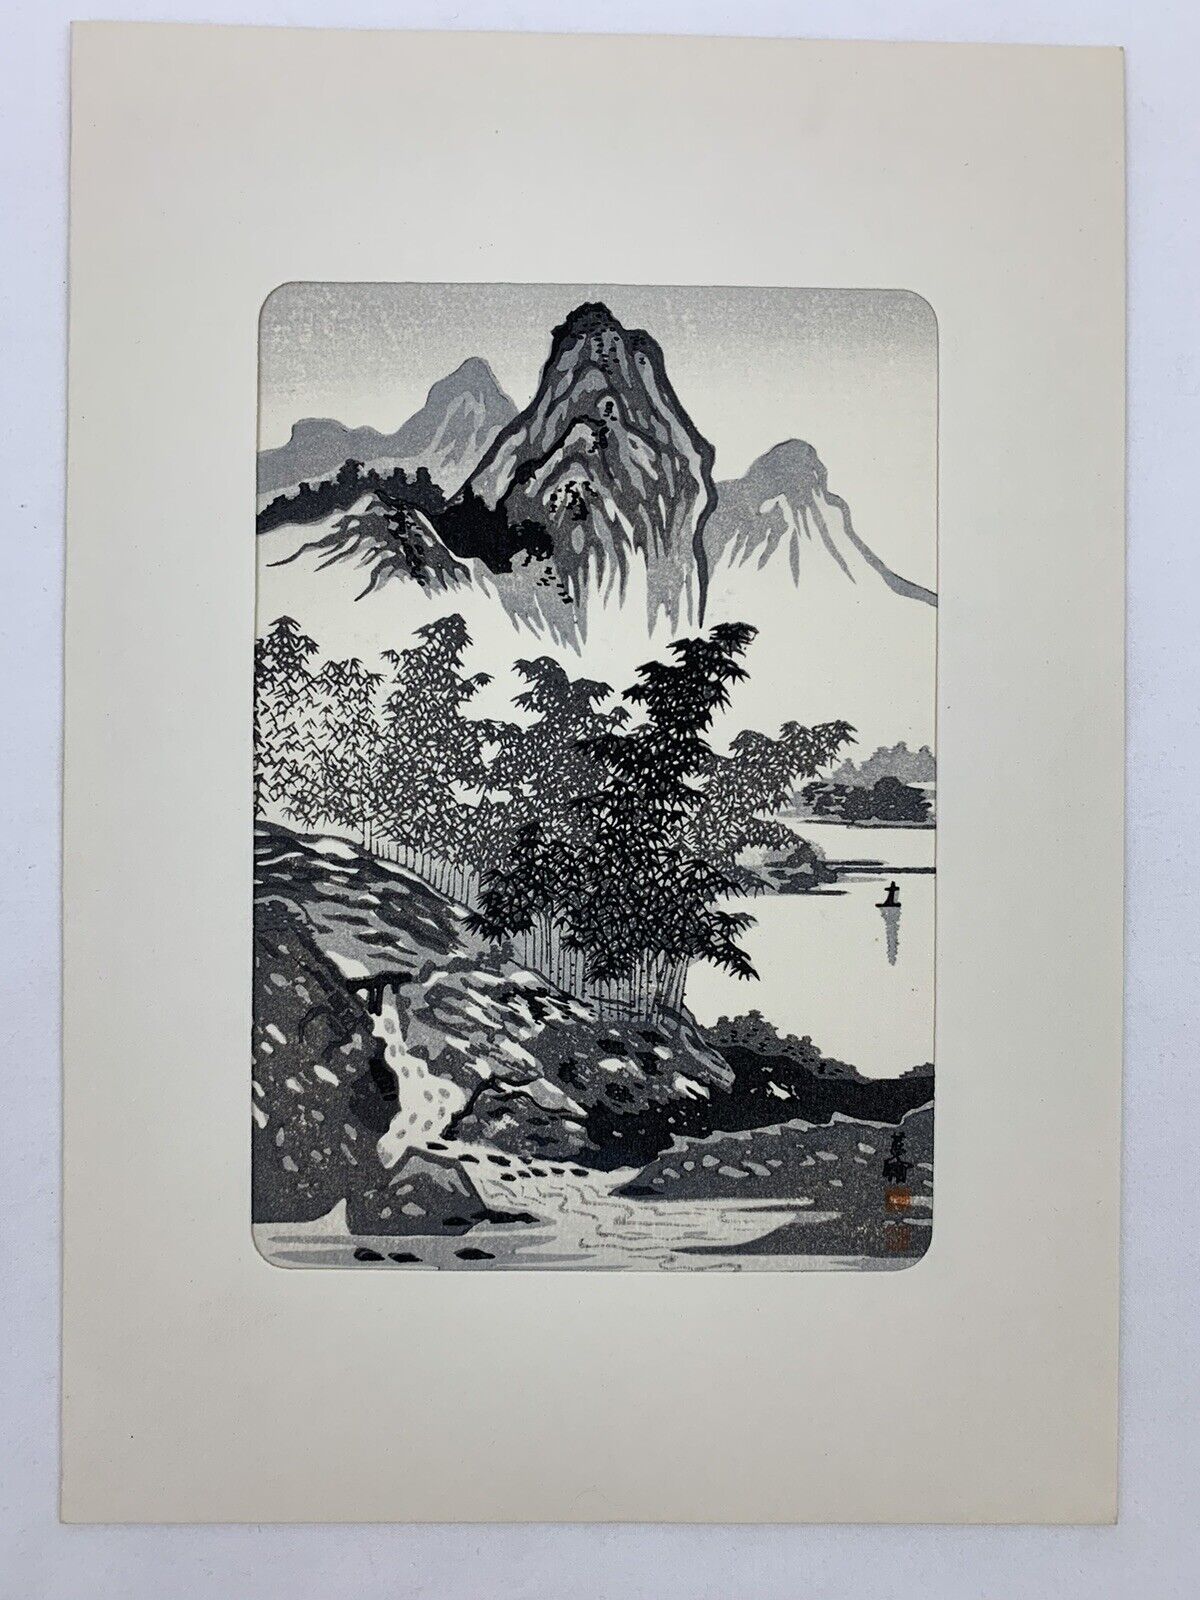 Rare Vintage Japanese Woodblock Print ‘Bamboo And Mountain’ By Imoto Tekiho